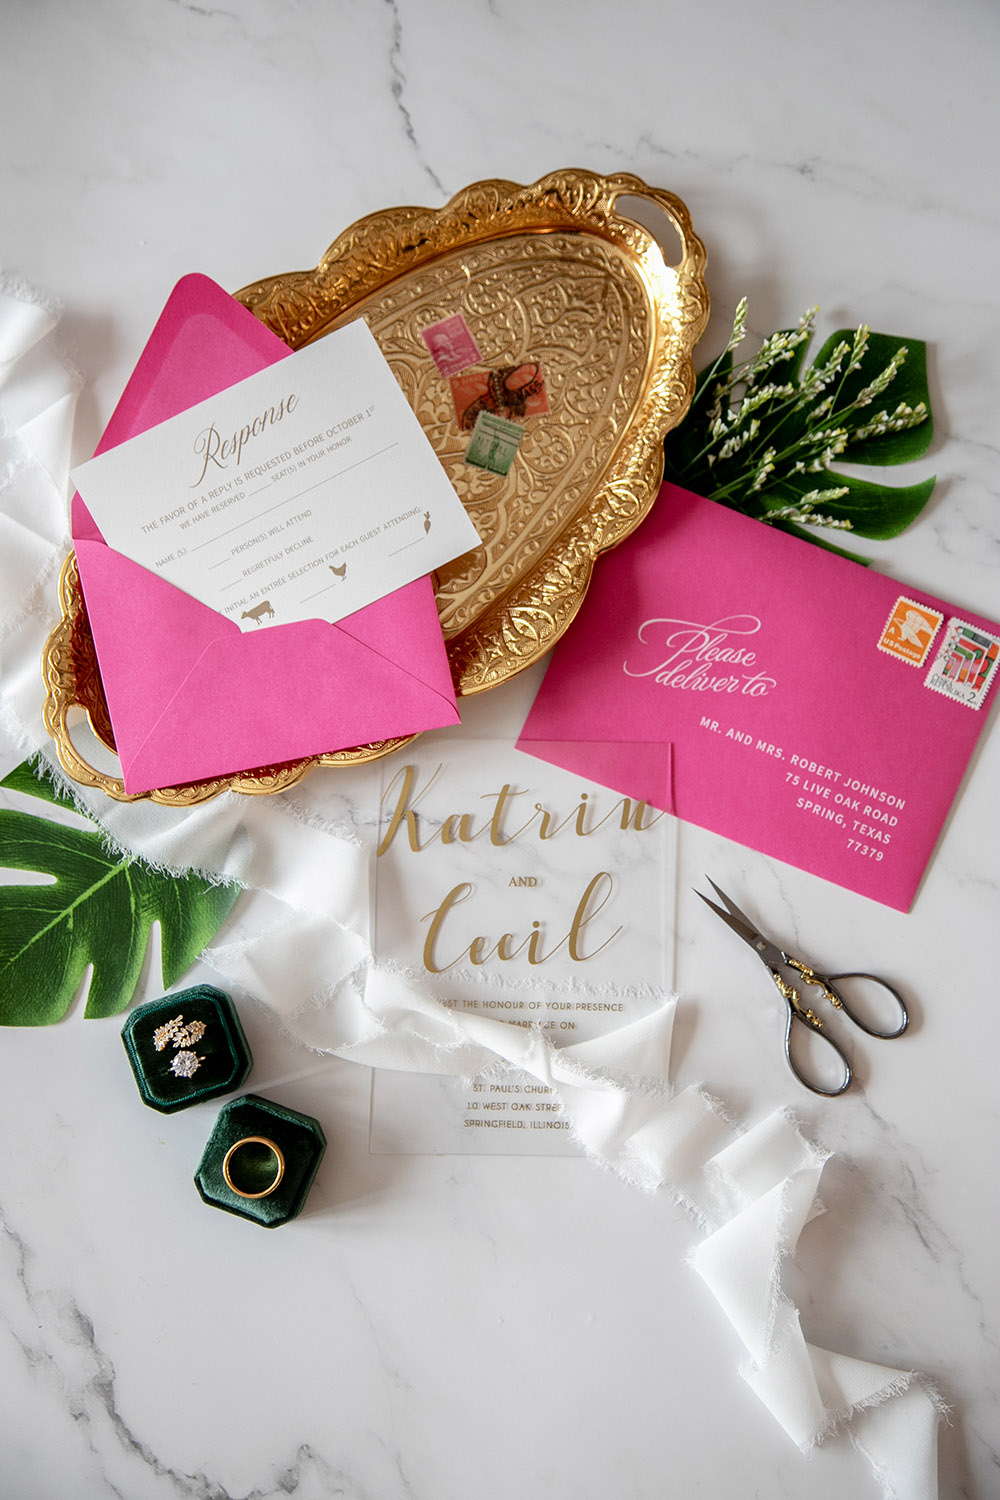 Acrylic invitation with hot pink envelopes